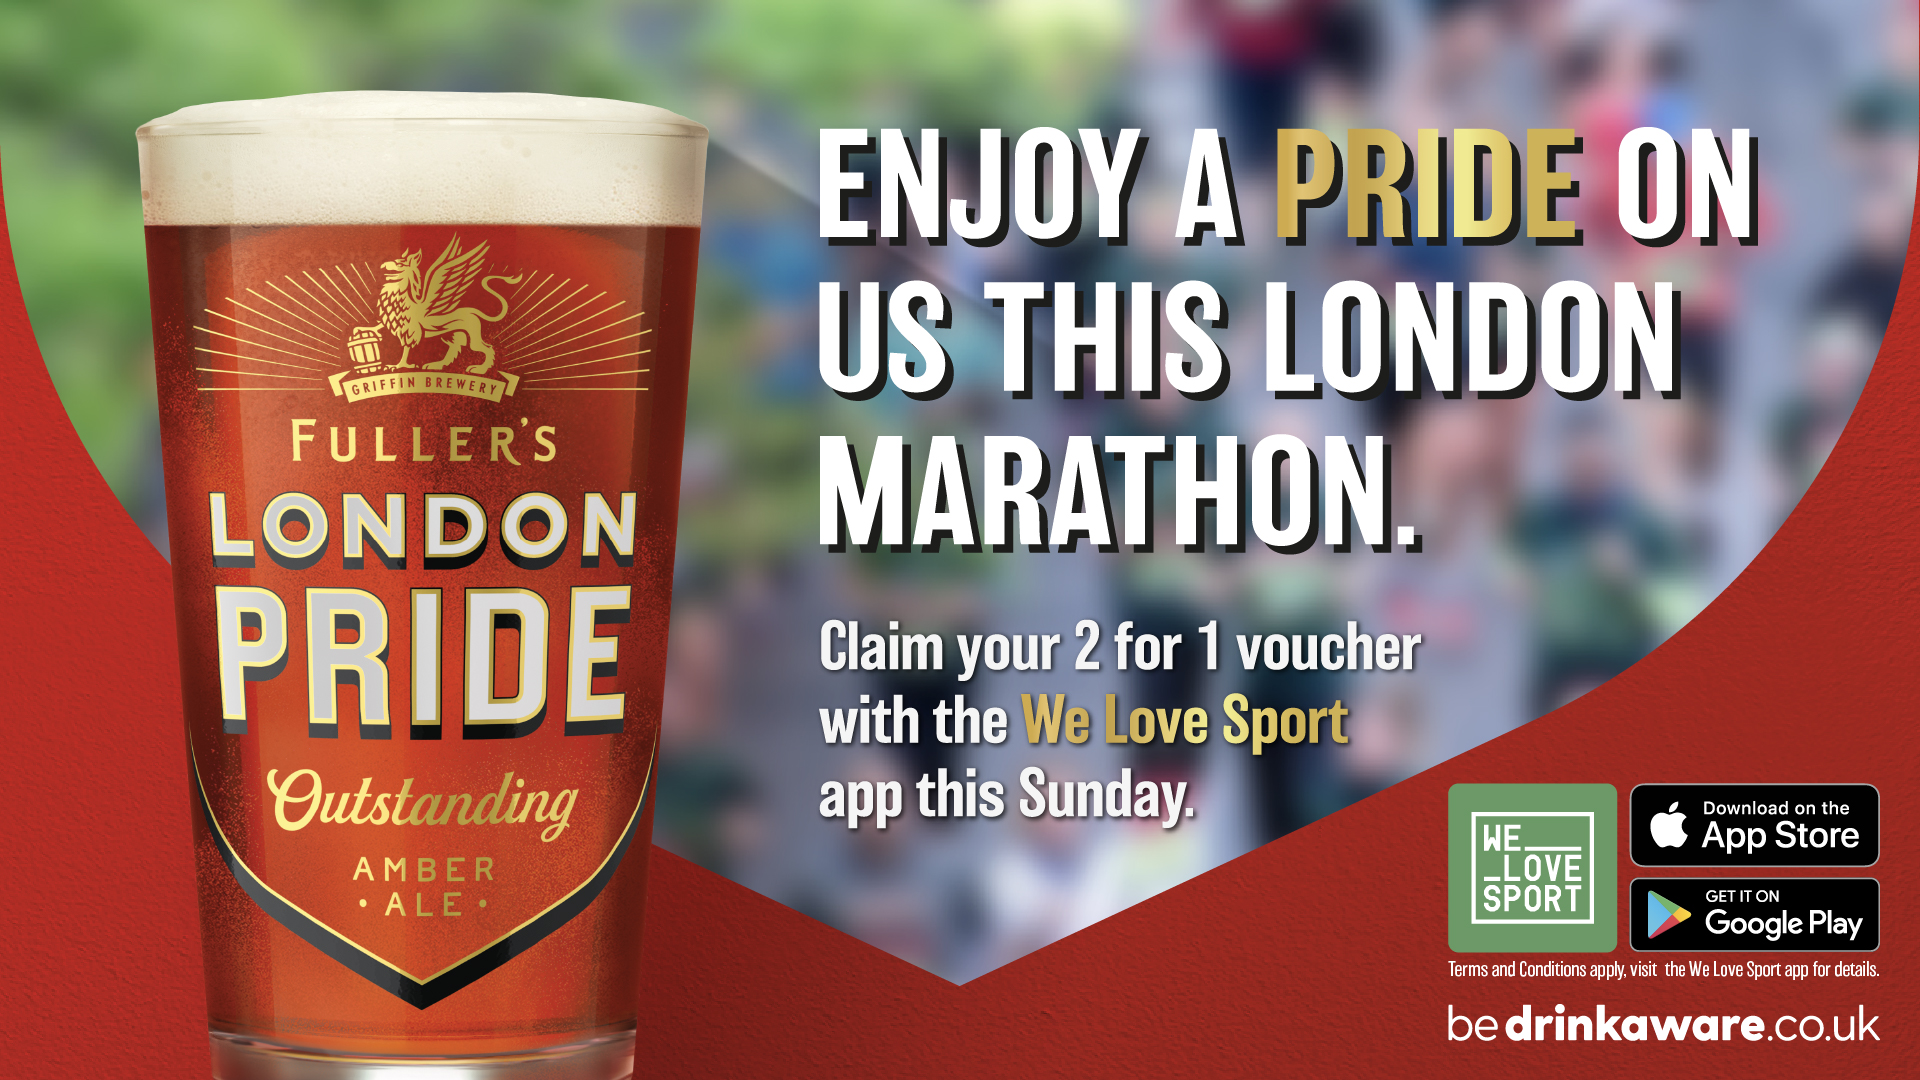 Enjoy a Pride on us this London Marathon